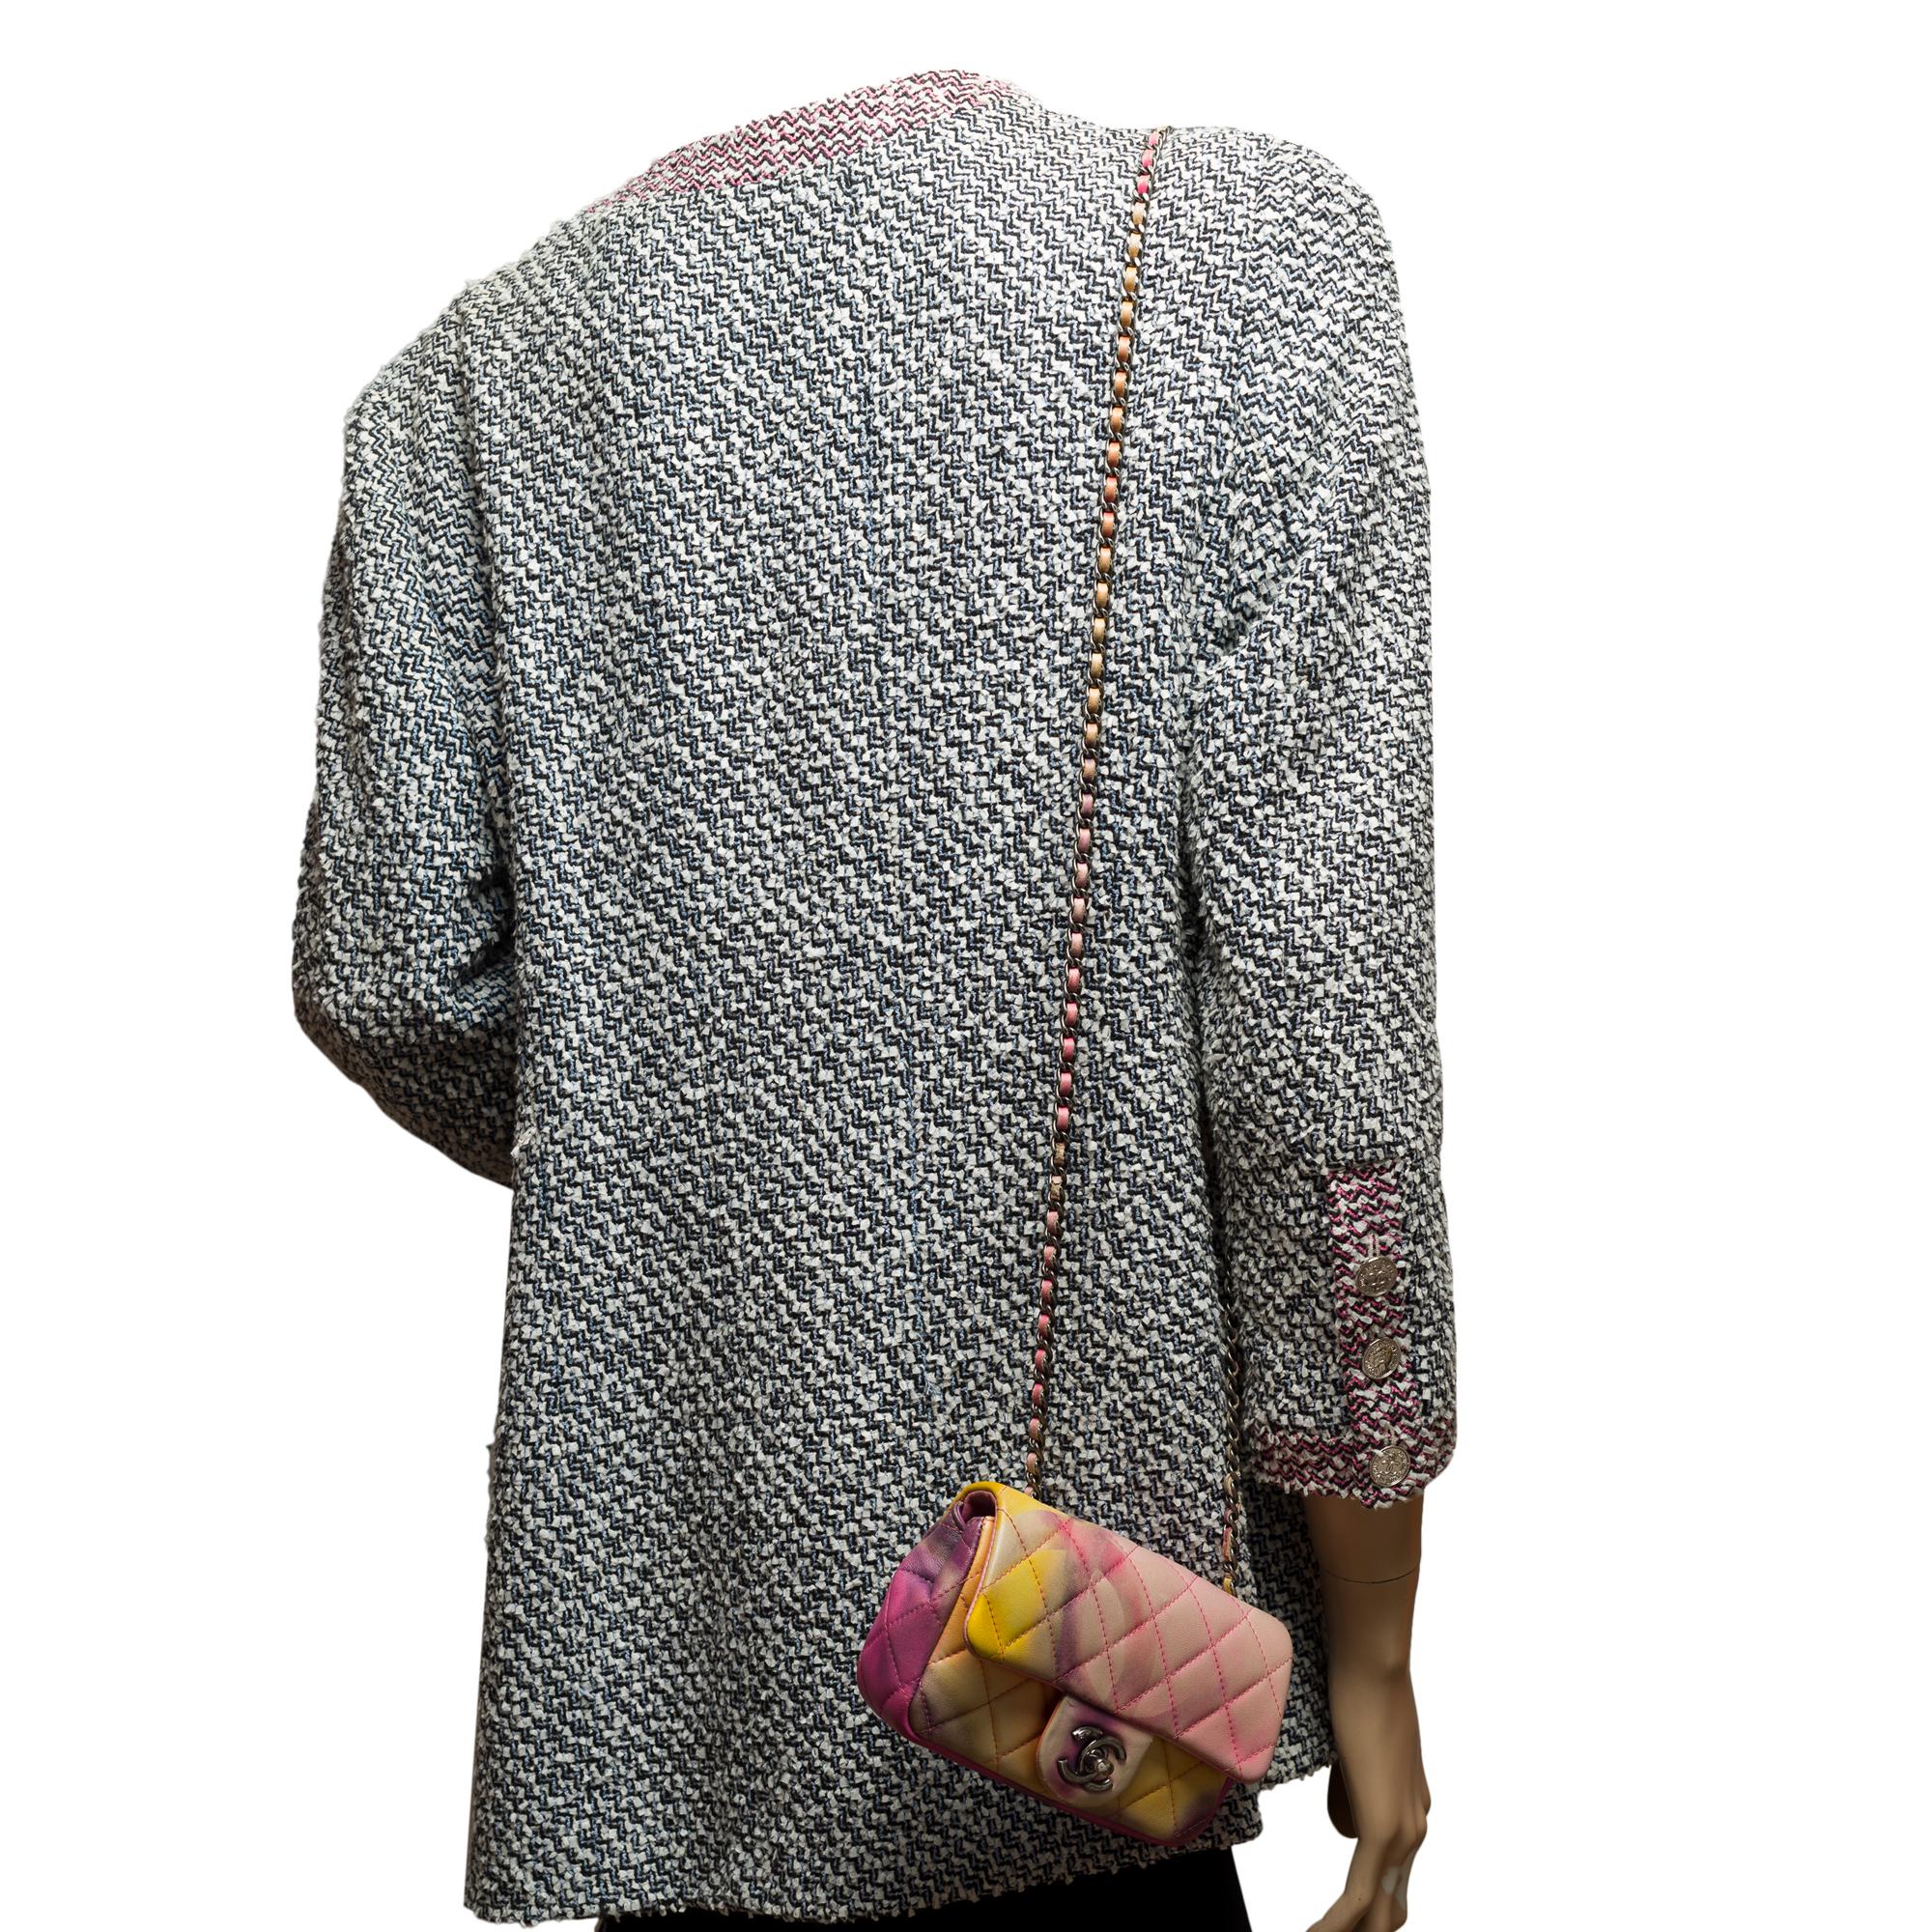 Rare Power Flower Chanel Timeless Mini shoulder bag in multicolor leather, SHW For Sale 8